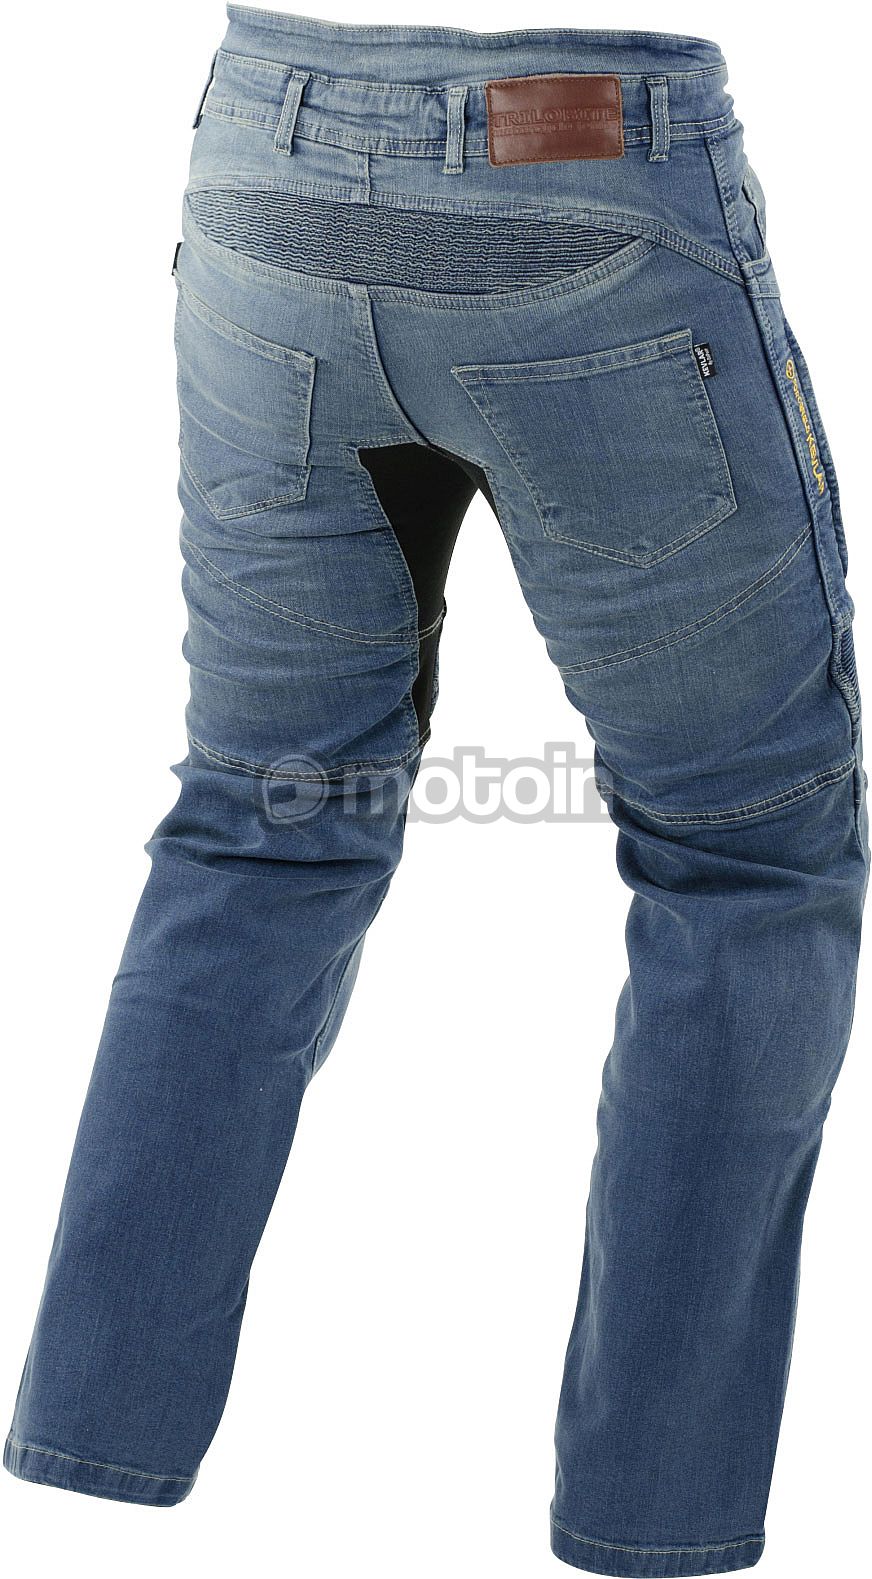 Trilobite jeans - motoin.de